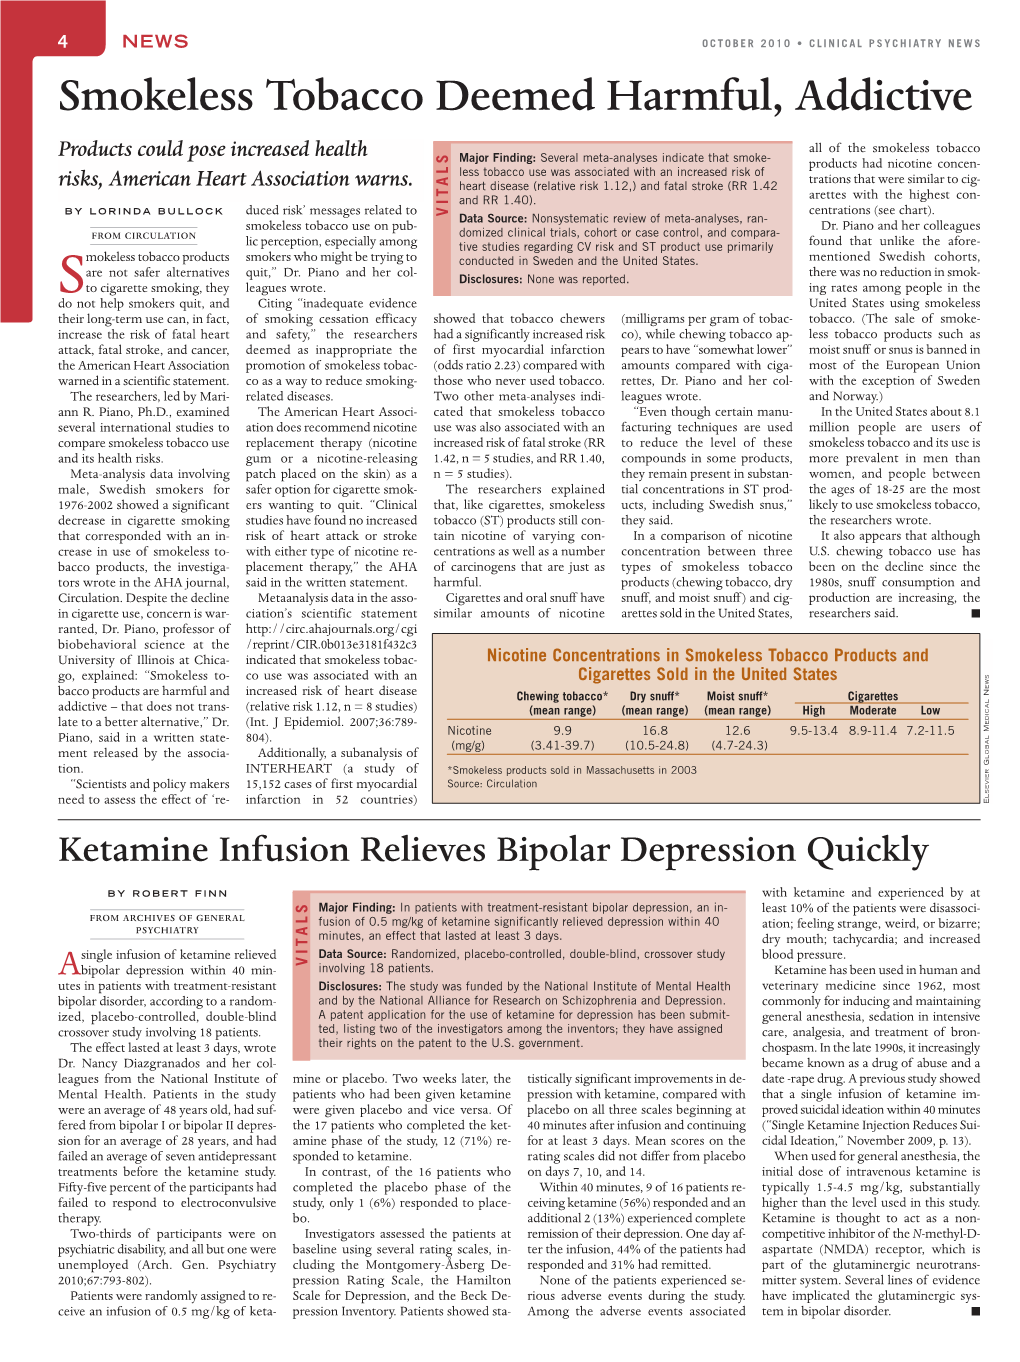 Ketamine Infusion Relieves Bipolar Depression Quickly